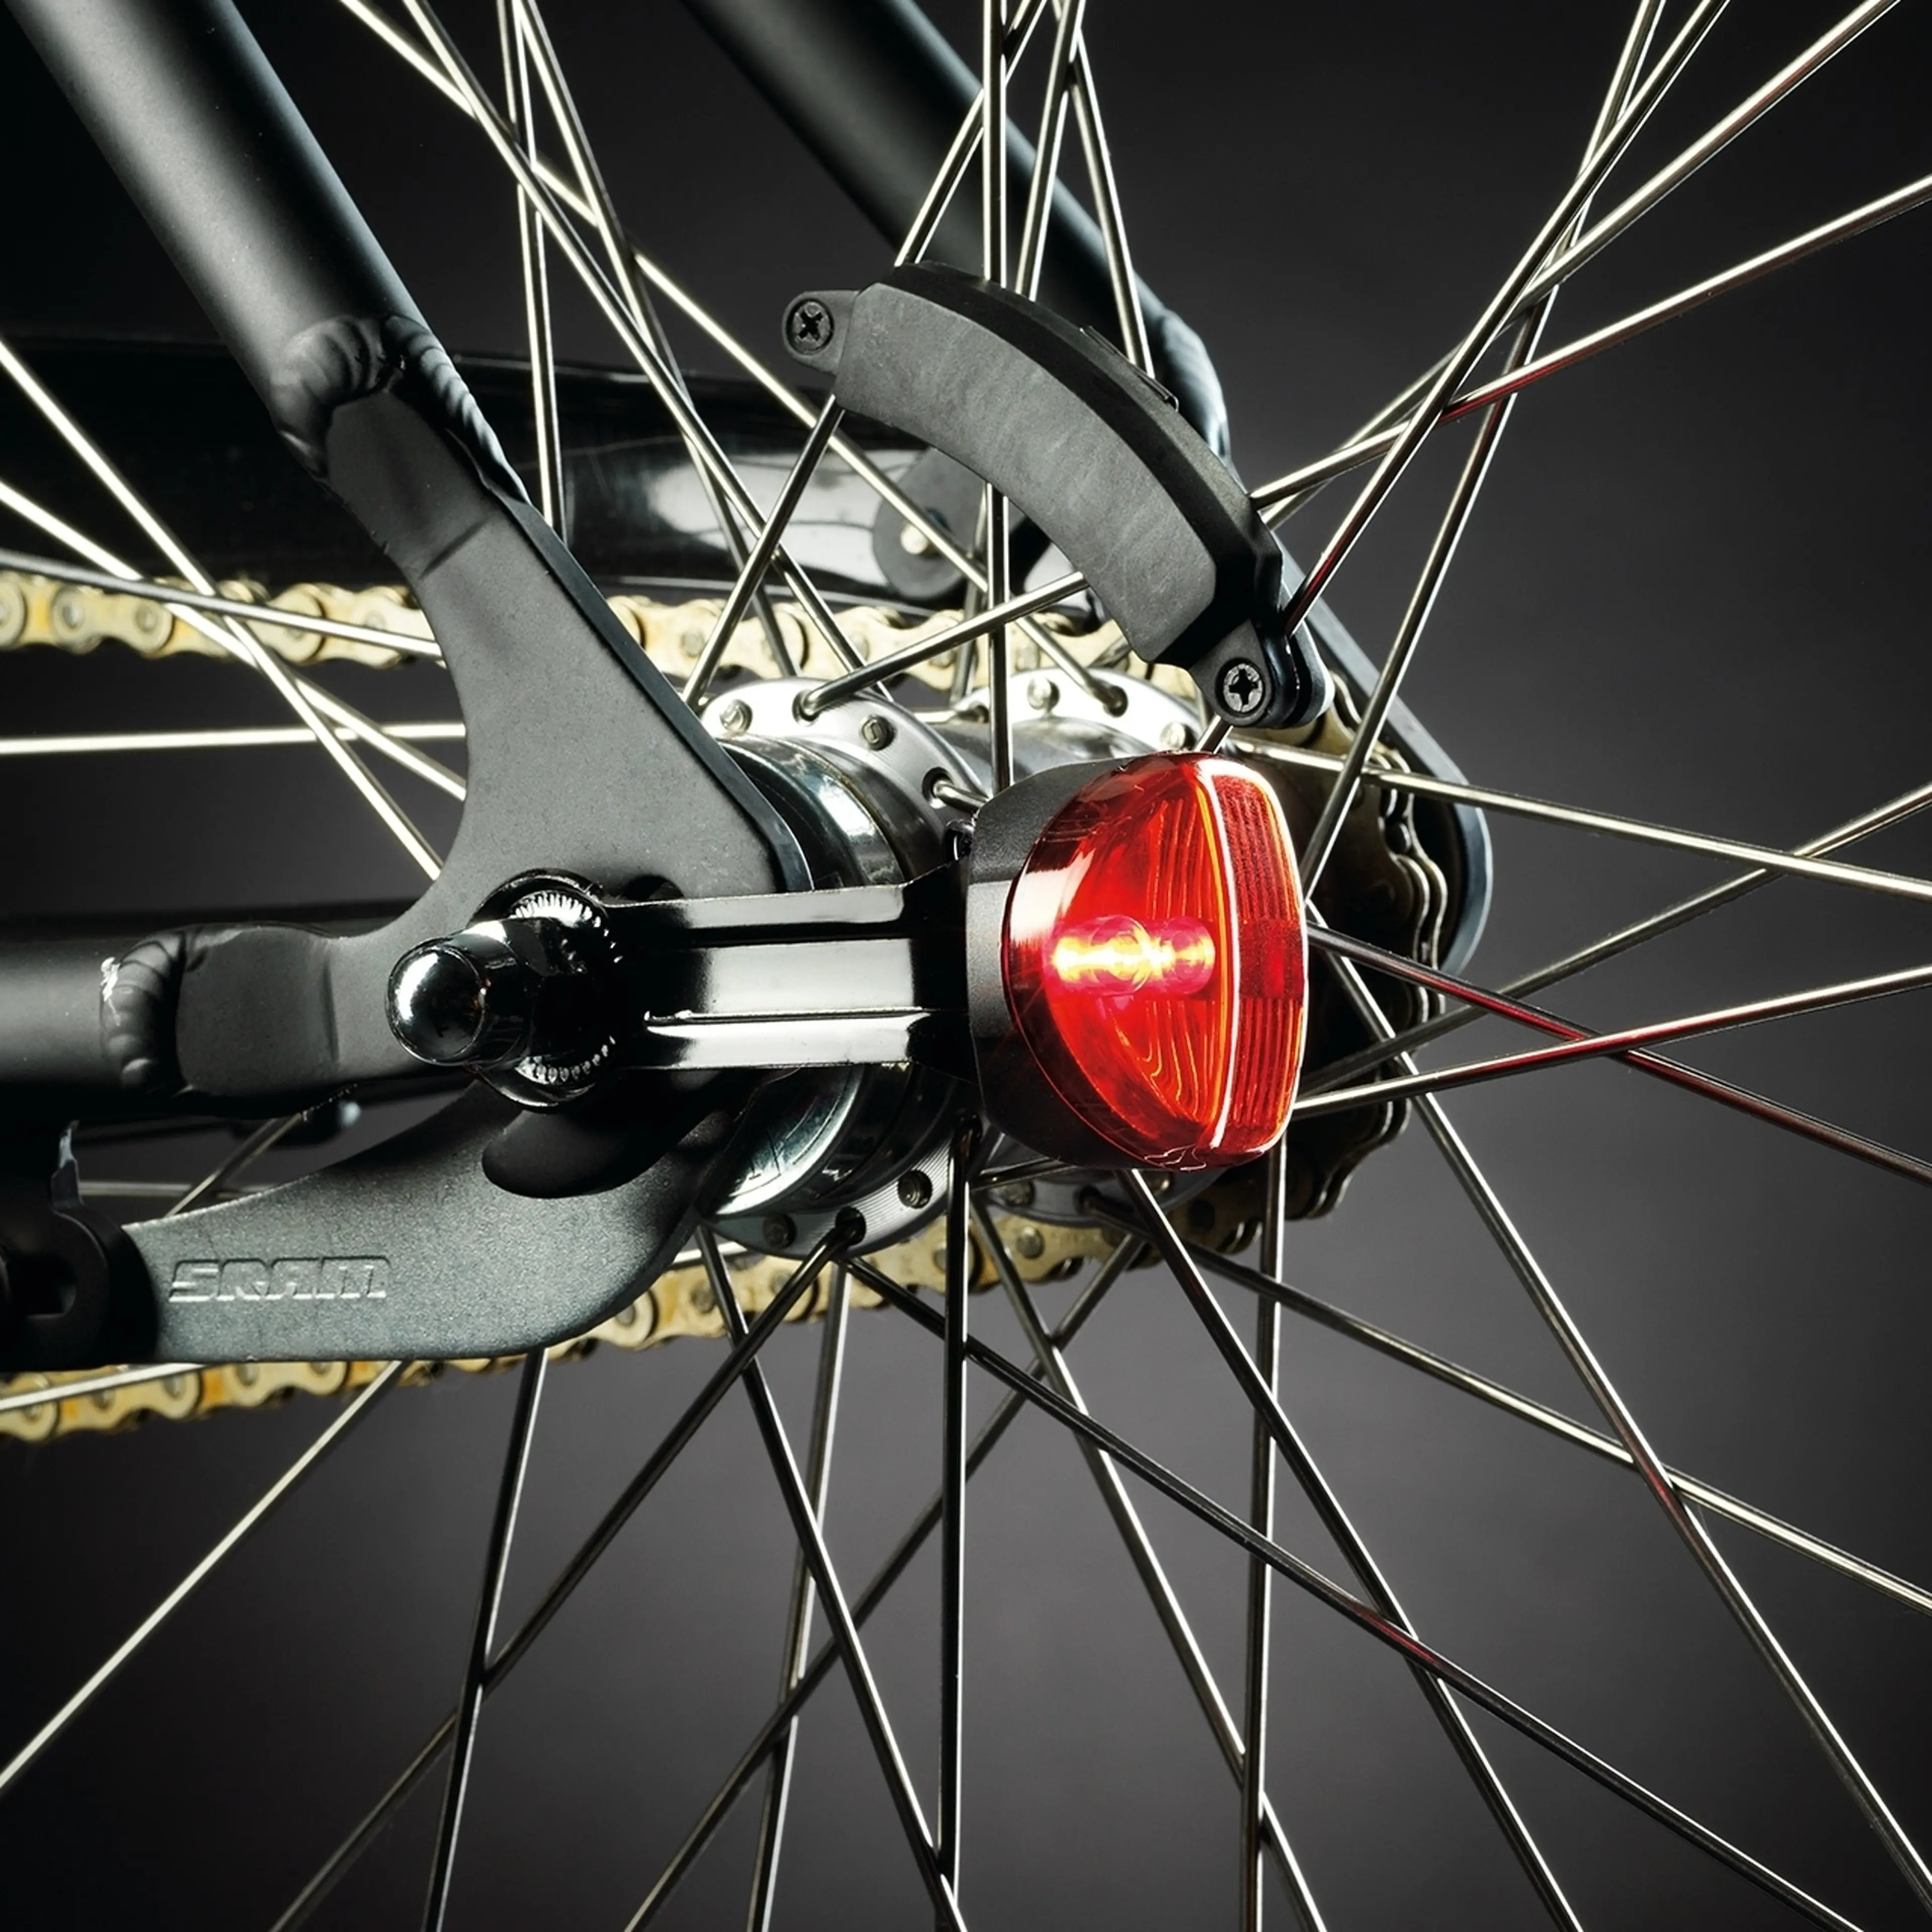 Image Sistem iluminare bicicleta pe baza de magneti Reelight - SL120 FLASH BACKUP